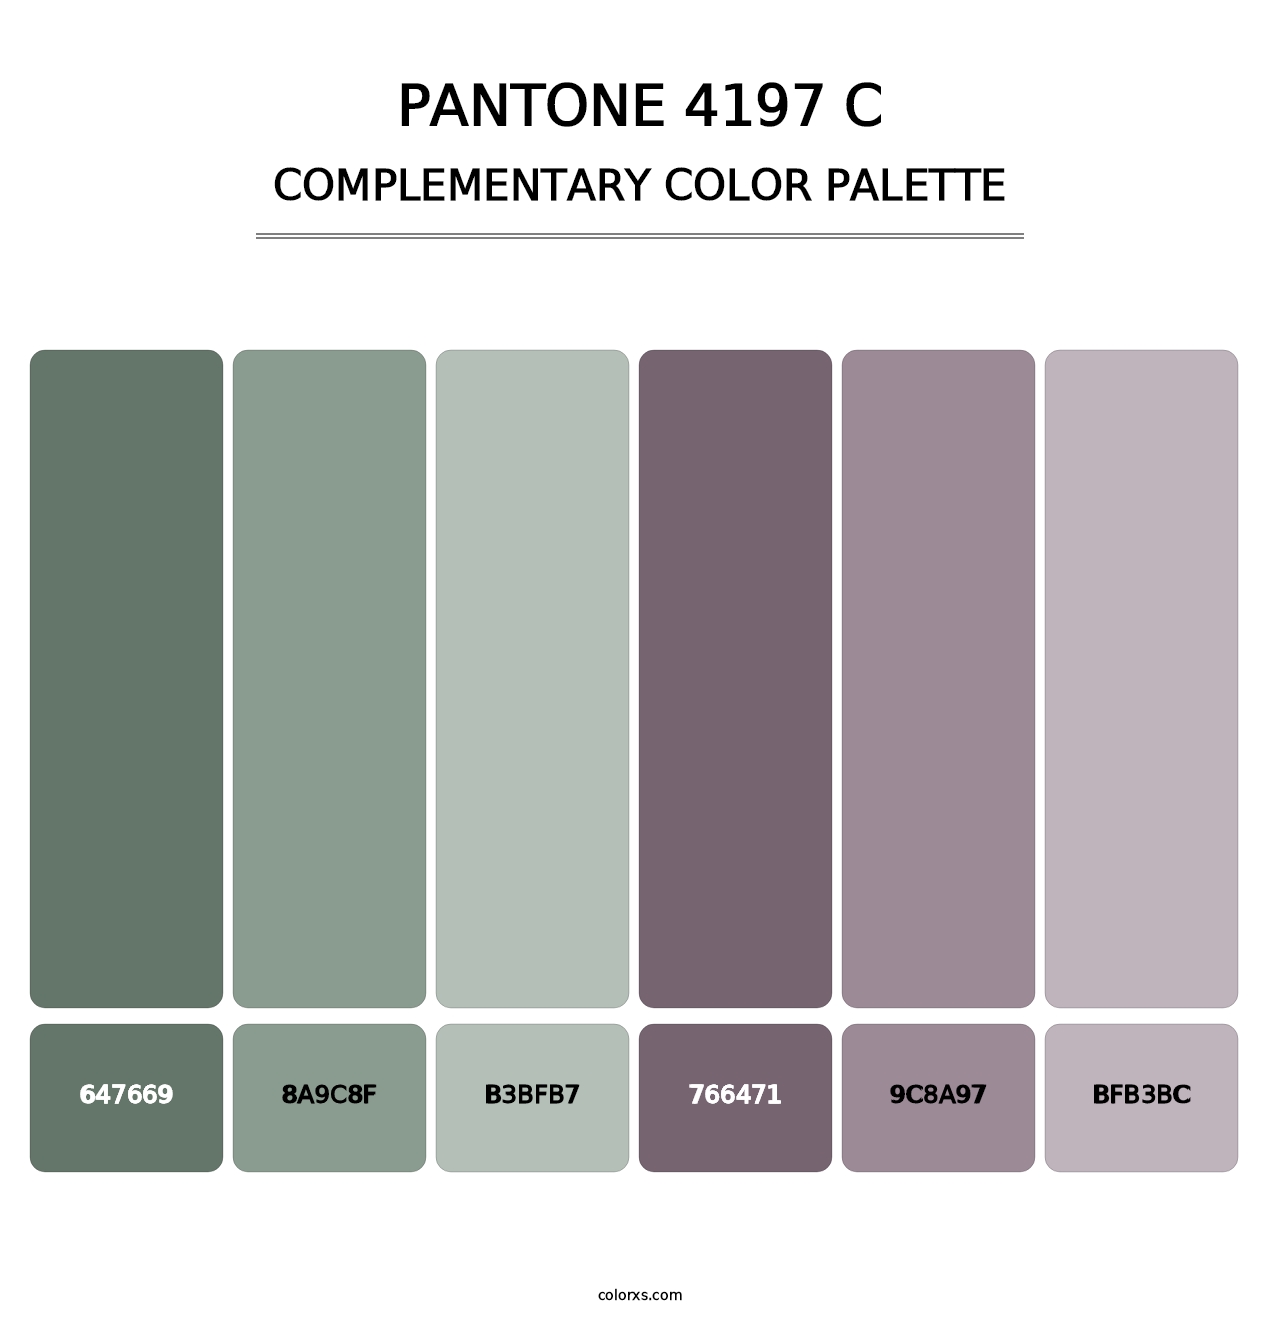 PANTONE 4197 C - Complementary Color Palette